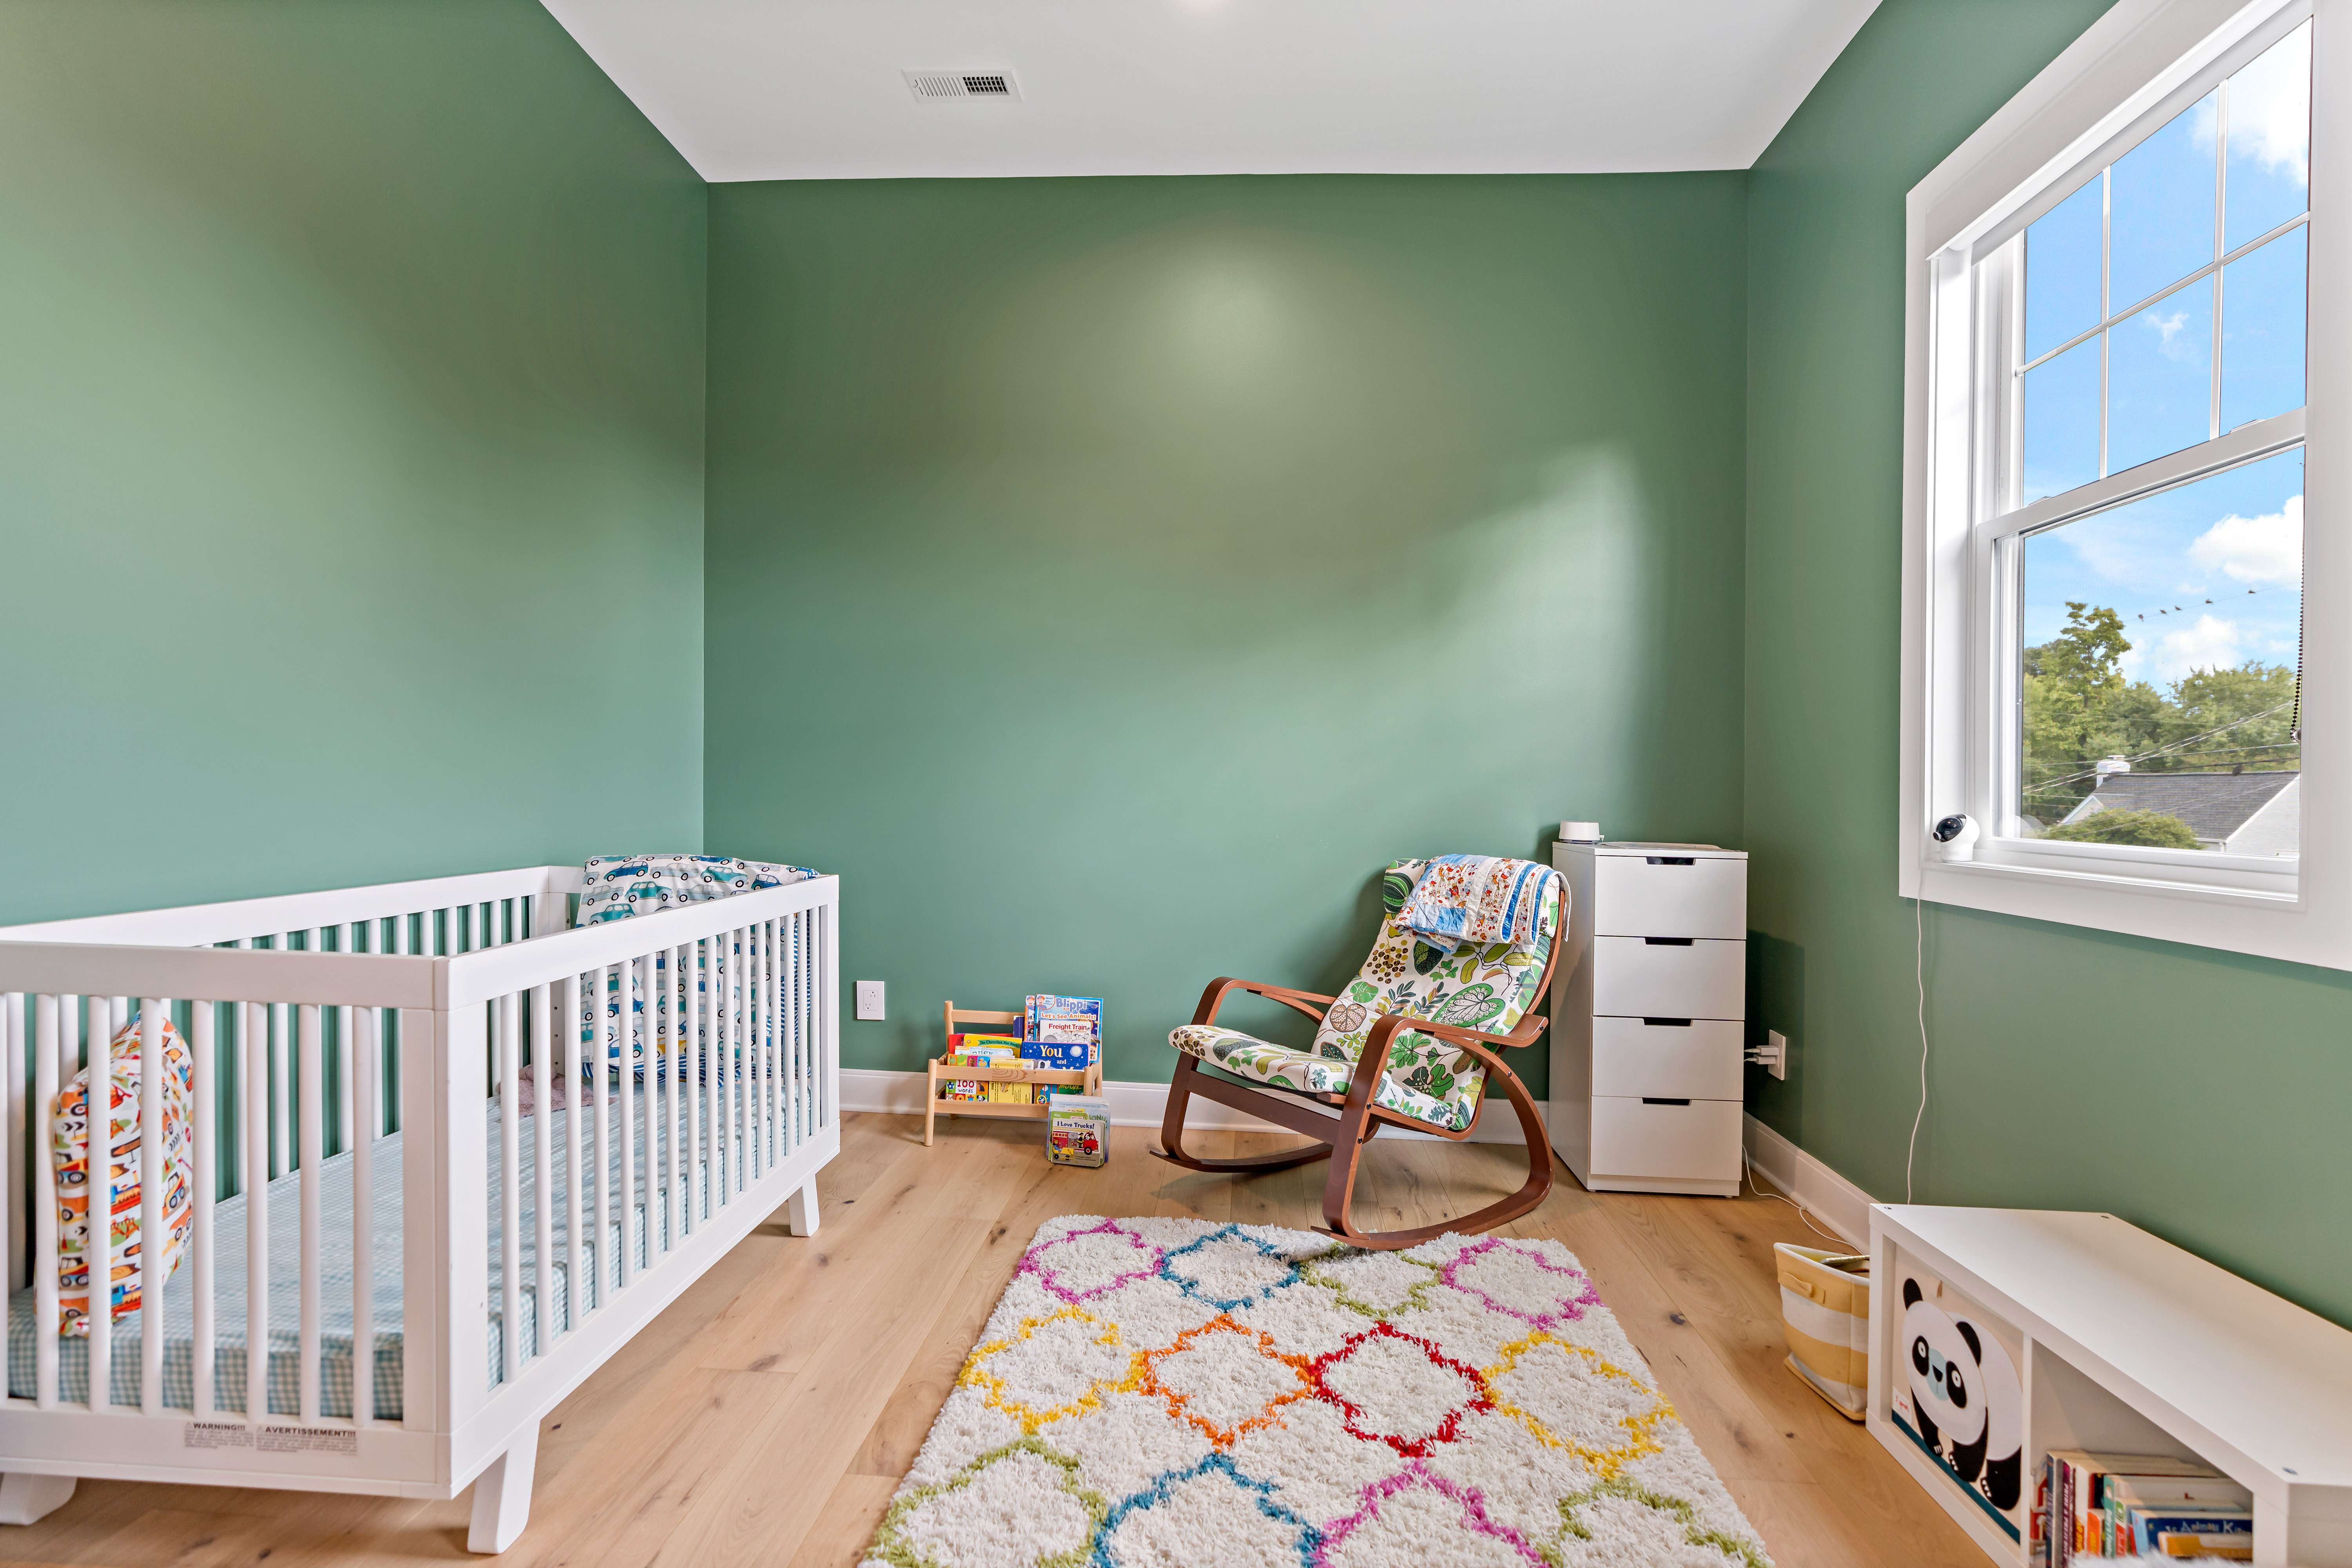 Baby nursery room with green walls and hardwood floors